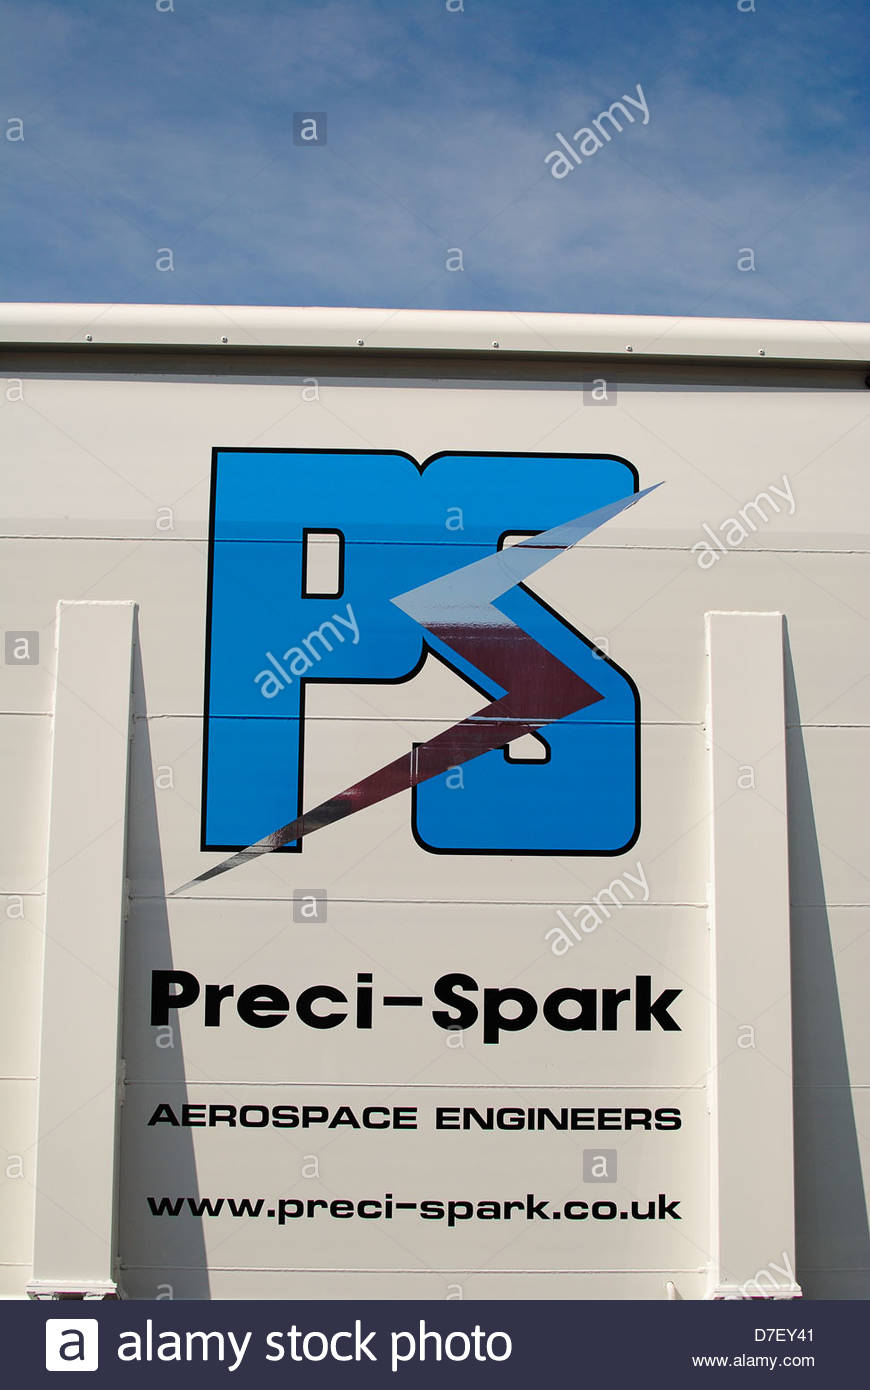 preci-spark-aerospace-engineers-D7EY41.jpg